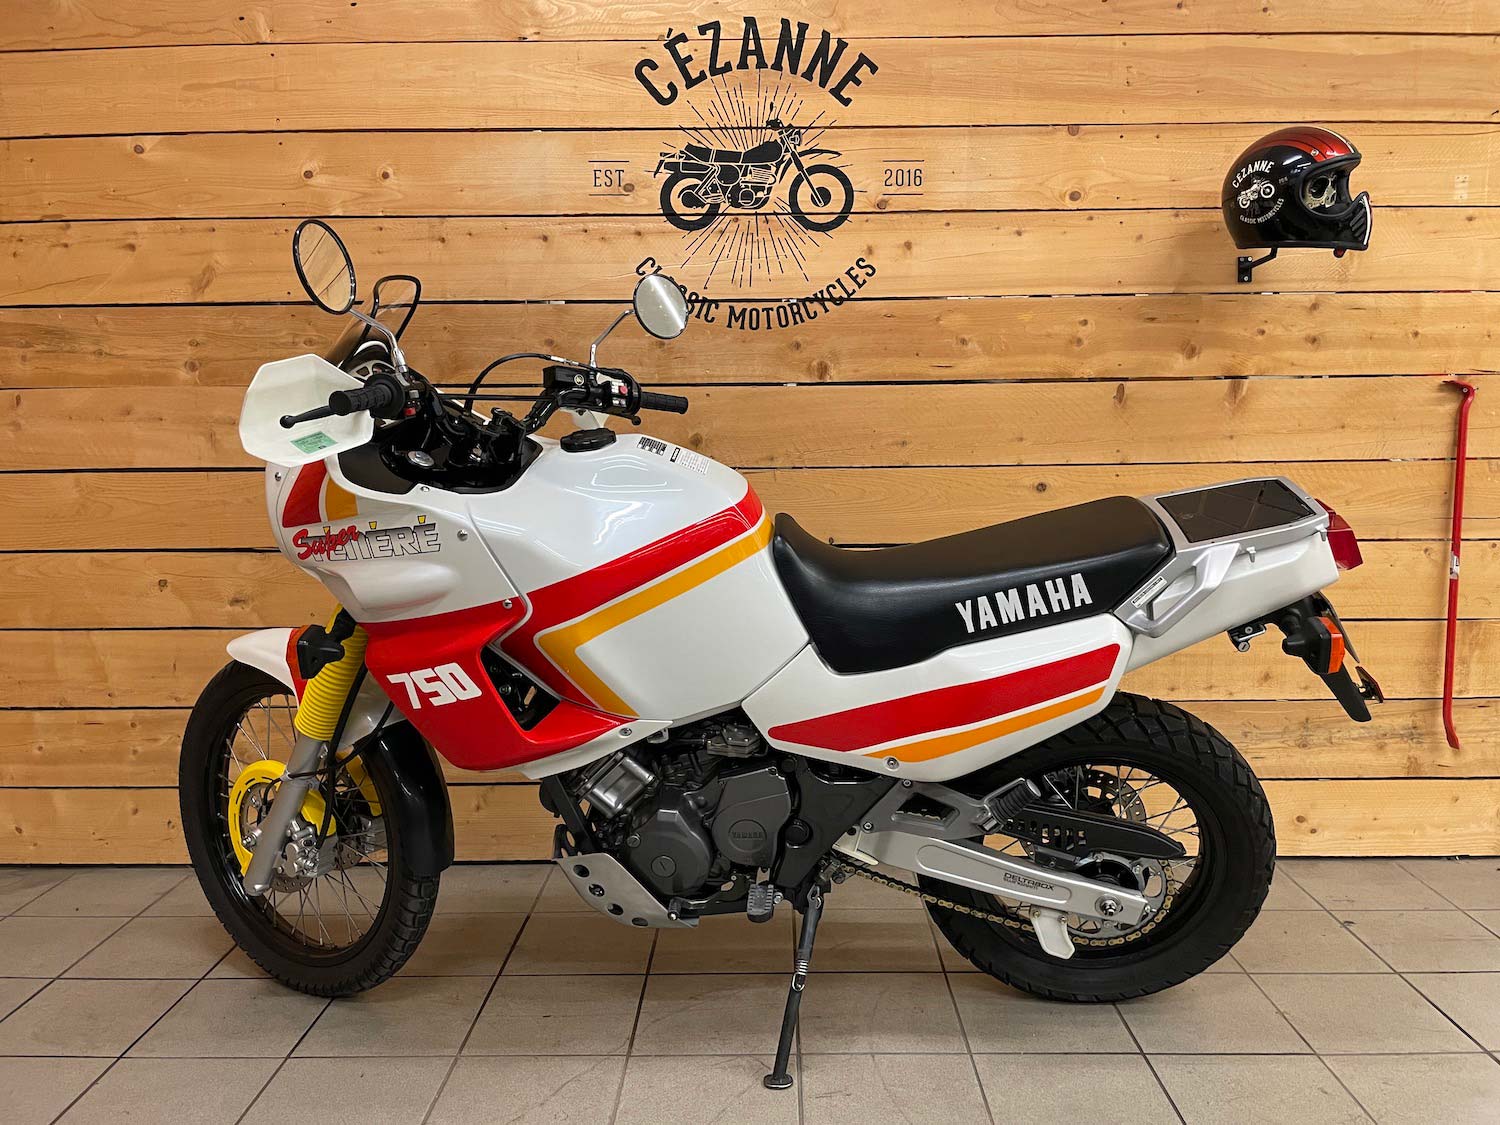 Yamaha_XTZ_750_cezanne_classic_motorcycles-142.jpg